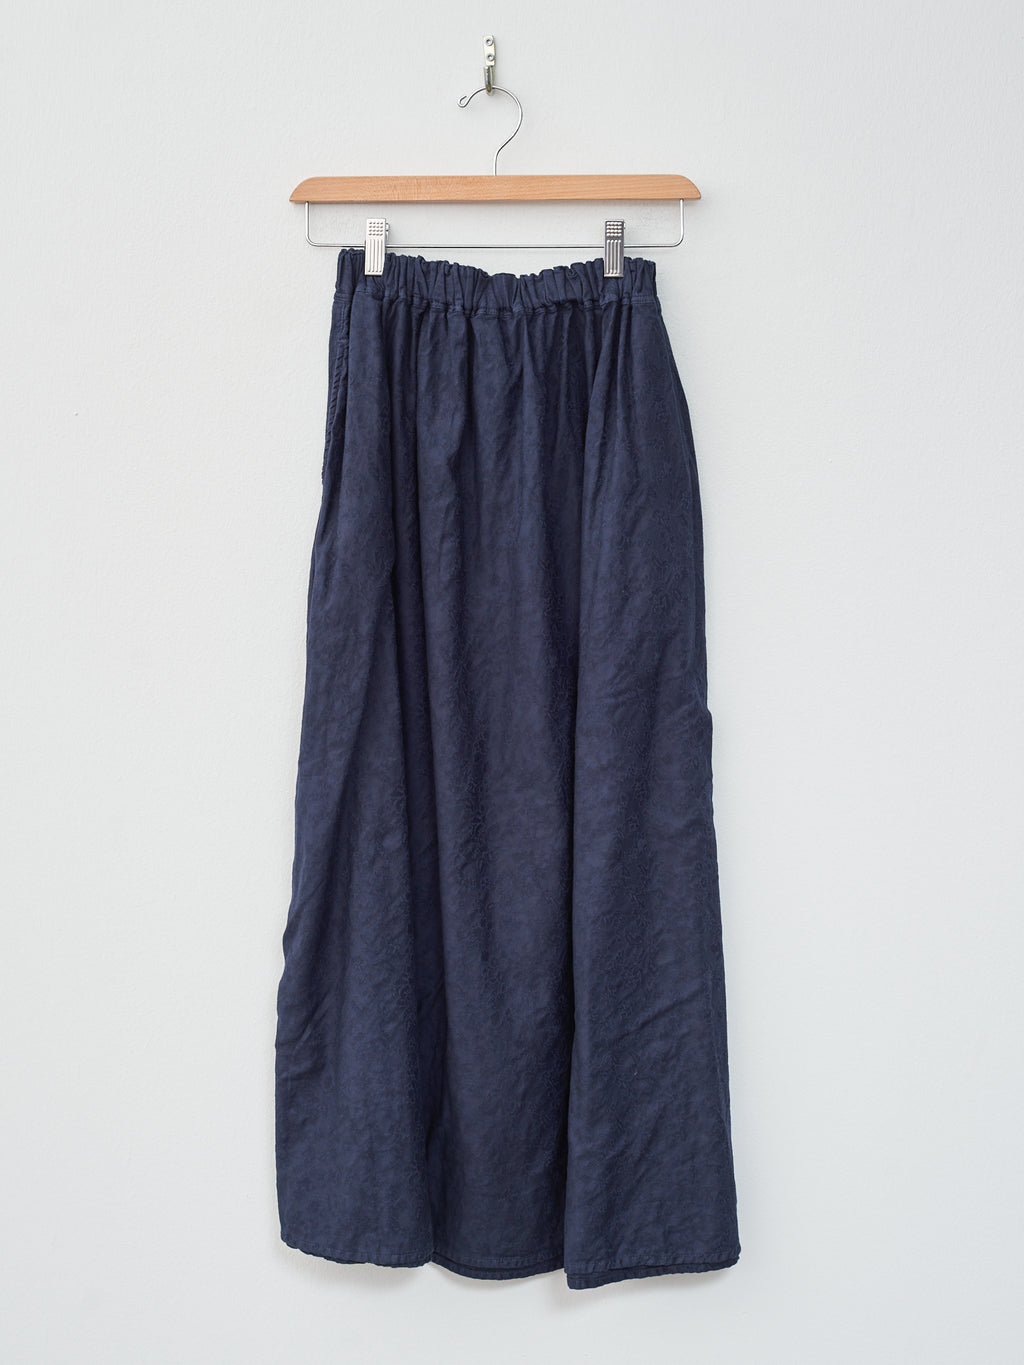 Namu Shop - Ichi Antiquites Azumadaki Vintage French Cotton Skirt - Navy